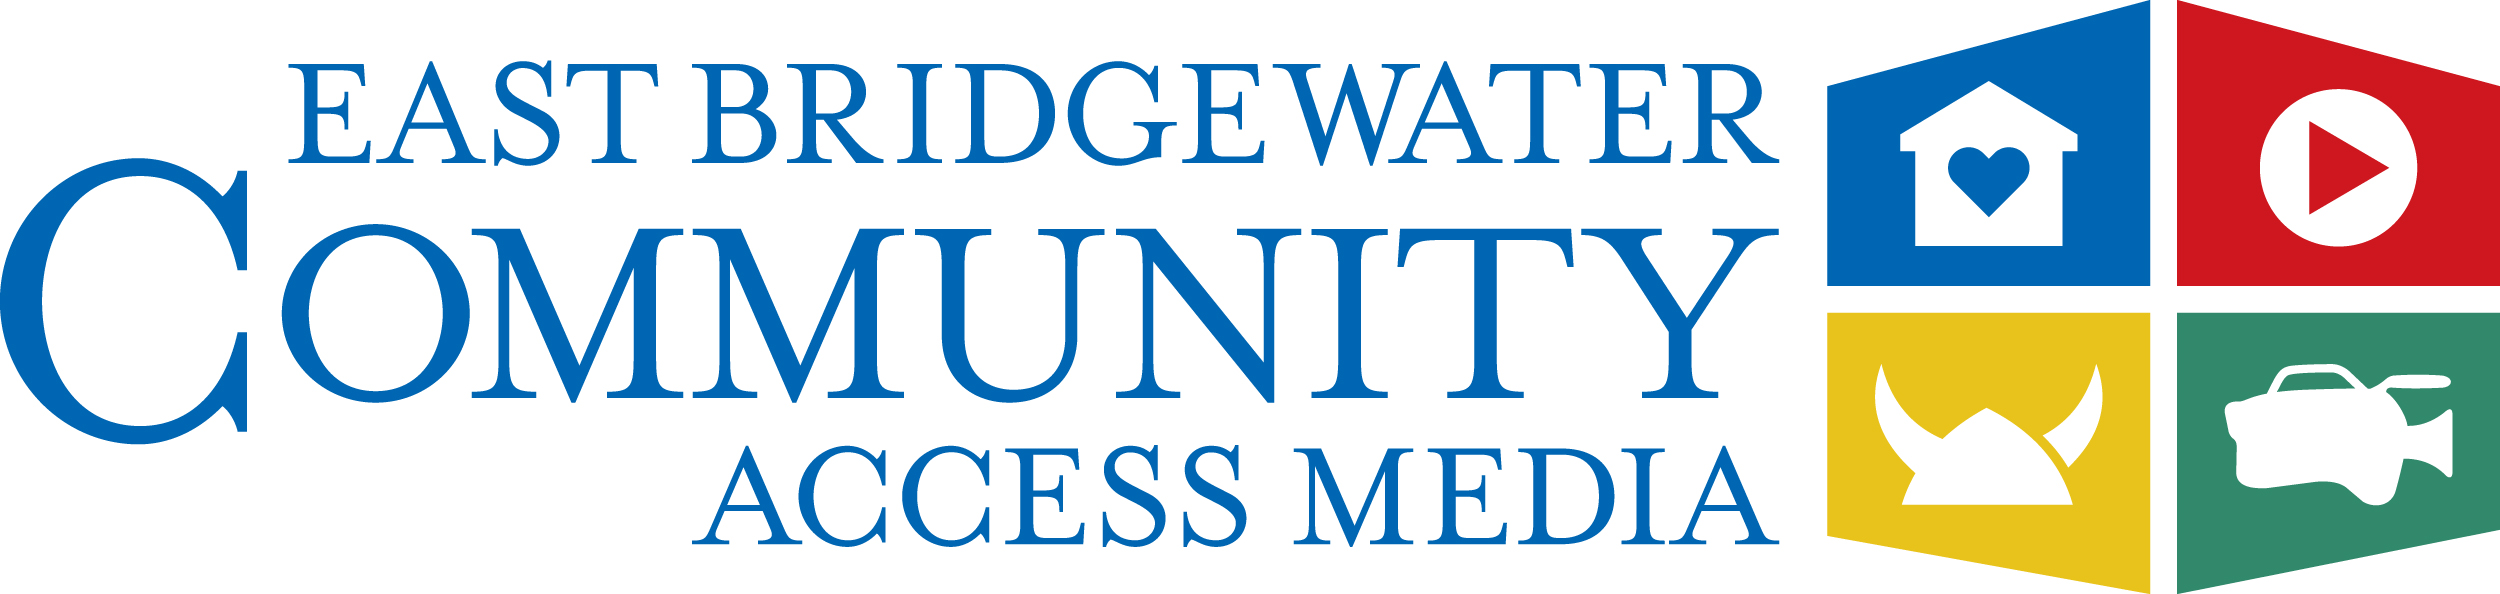 East Bridgewater Community Access Media - East Bridgewater VoD Player - organization logo